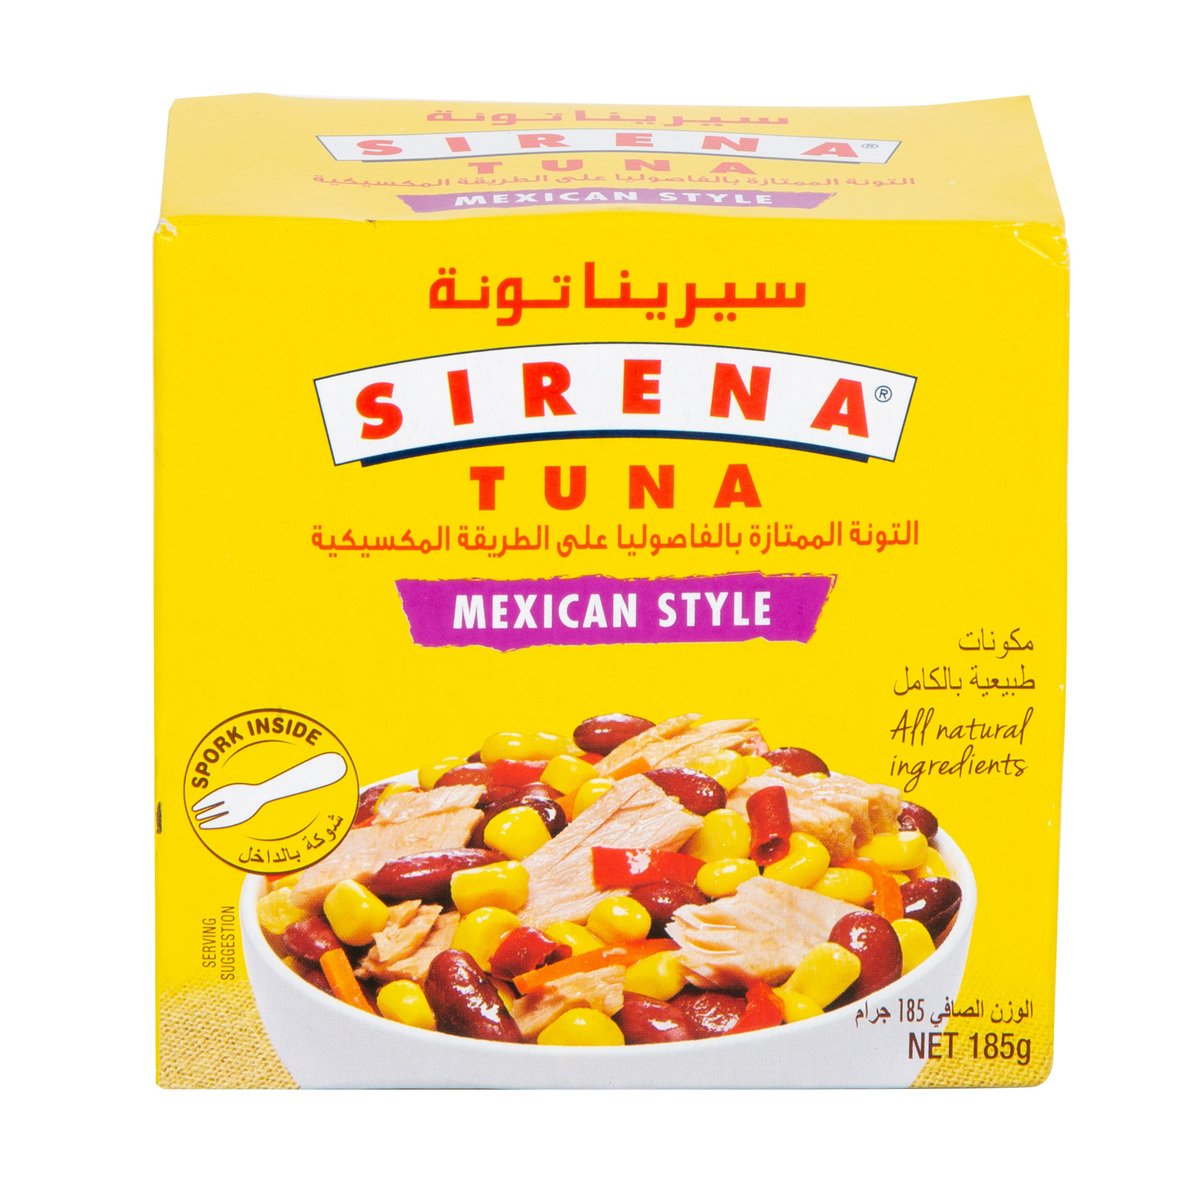 Sirena Tuna Mexican Style 185 g